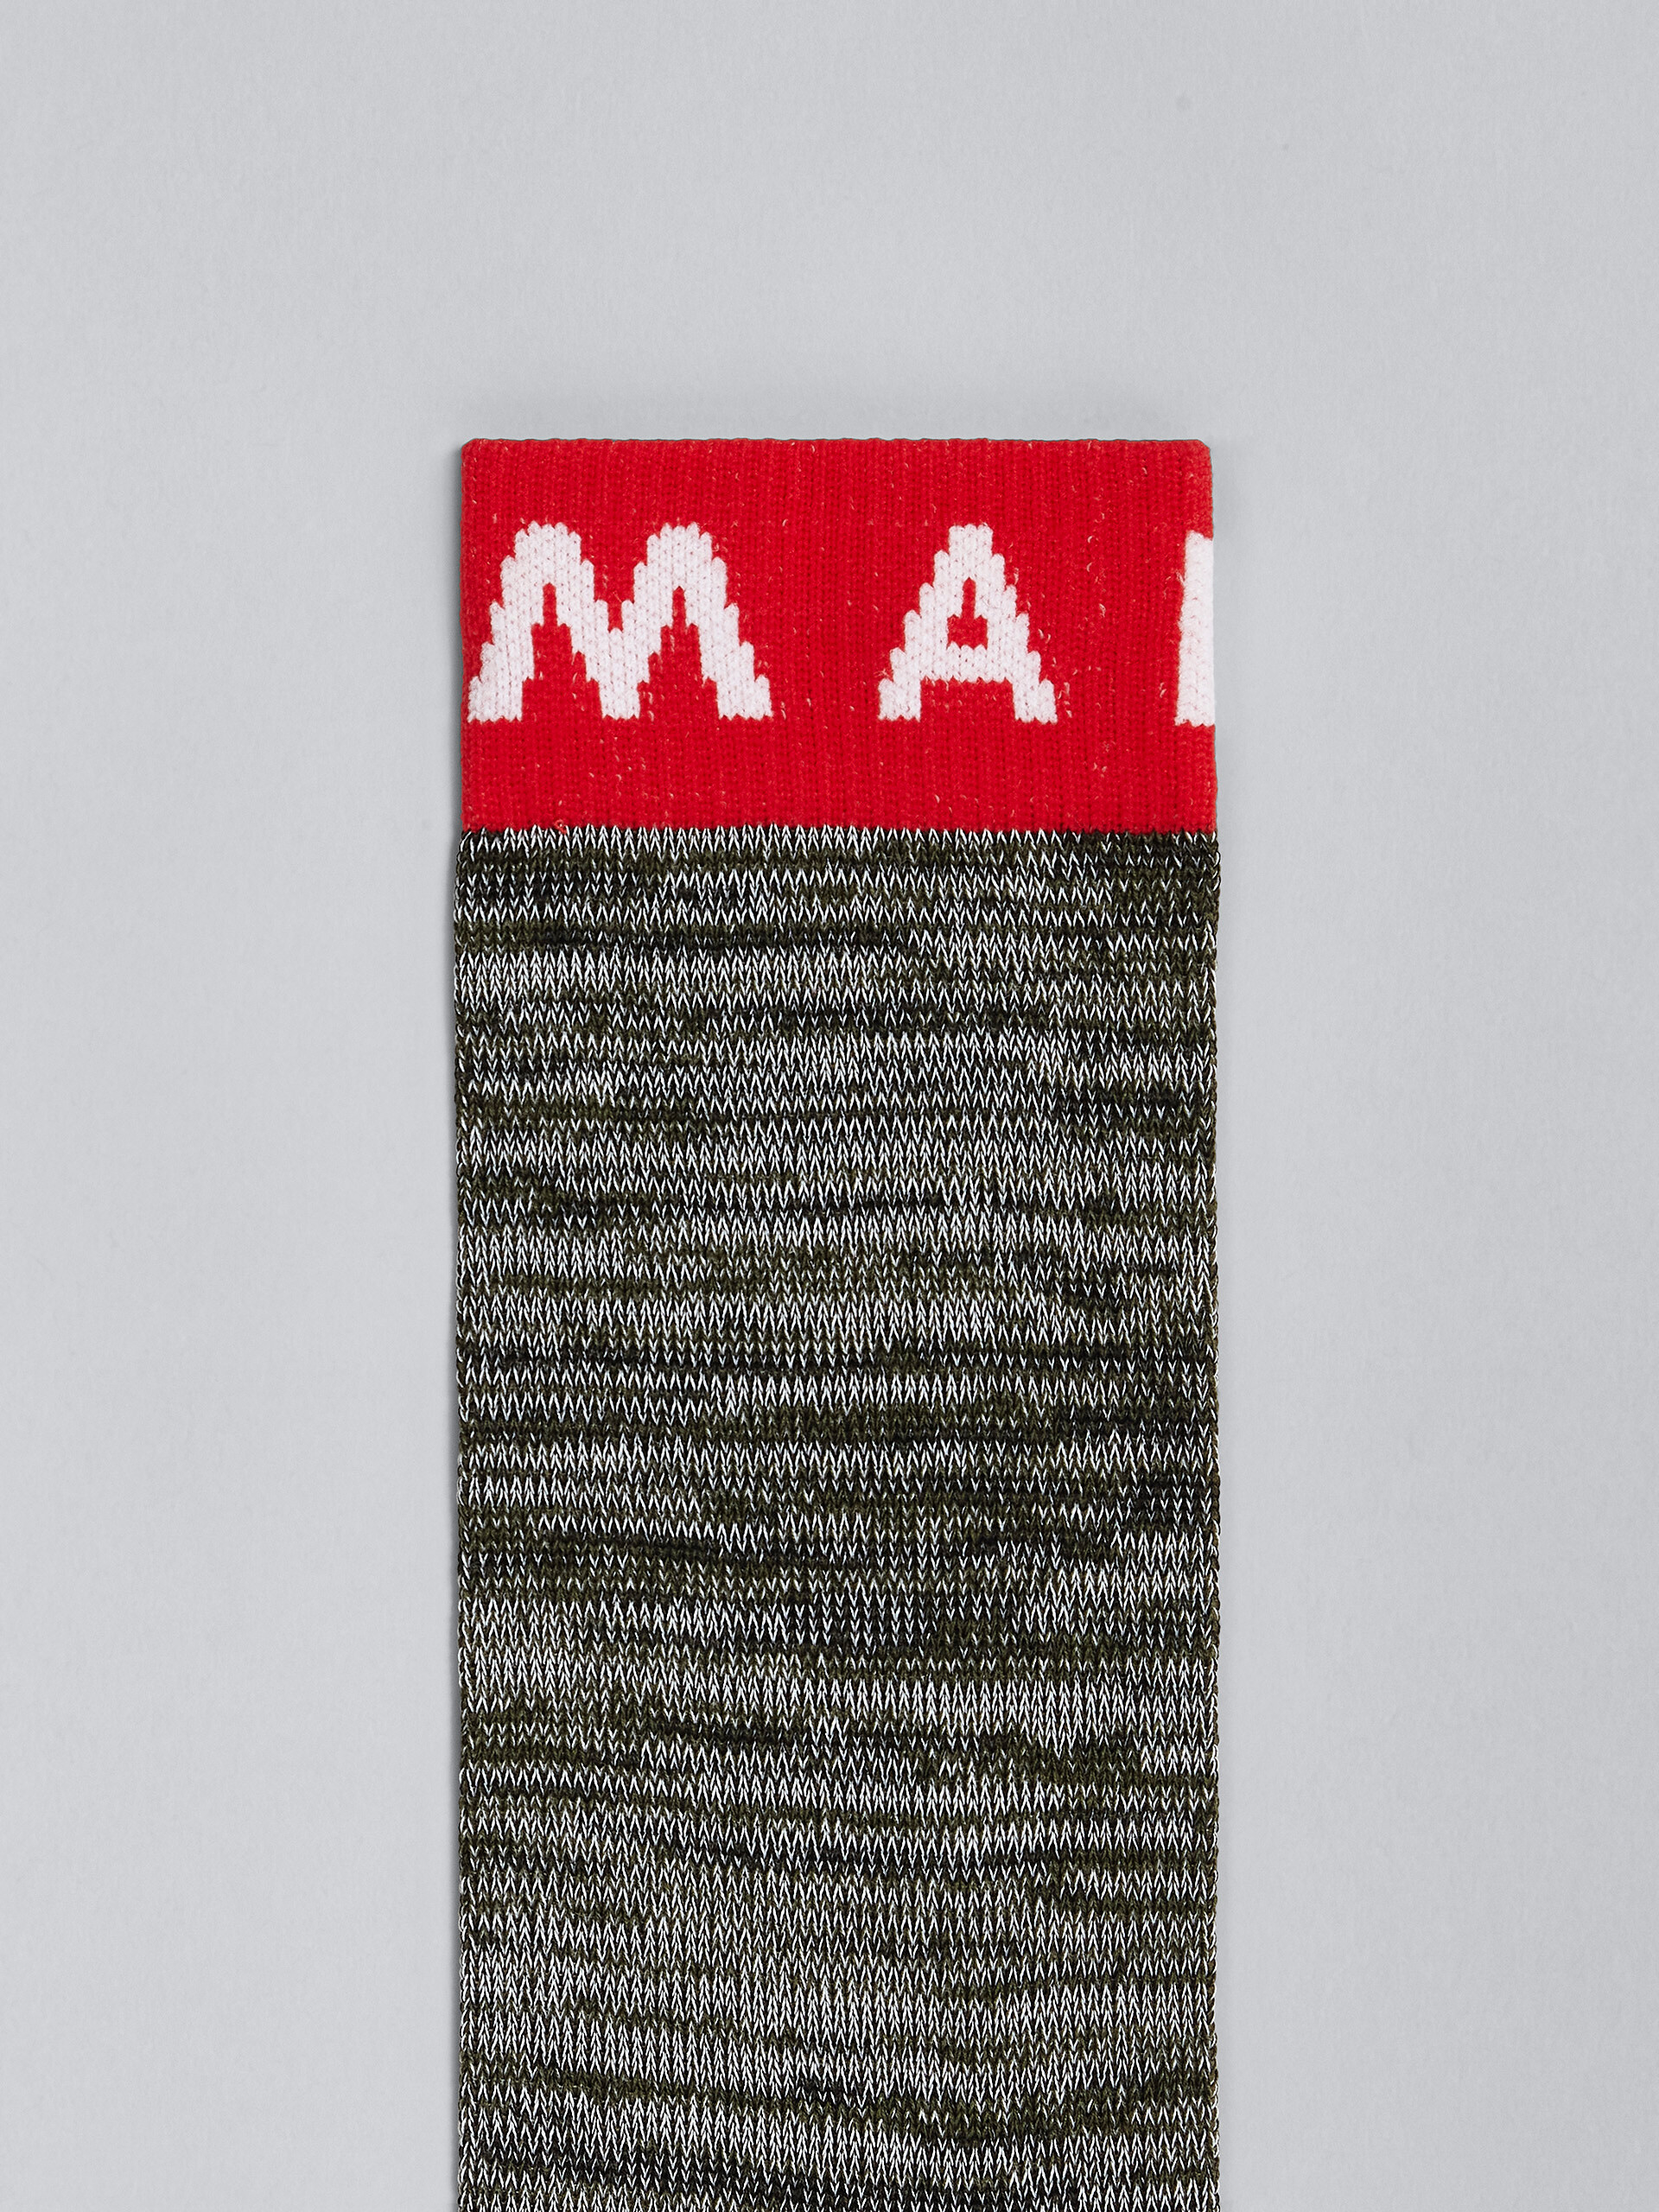 Black mouliné cotton and nylon socks - Socks - Image 3